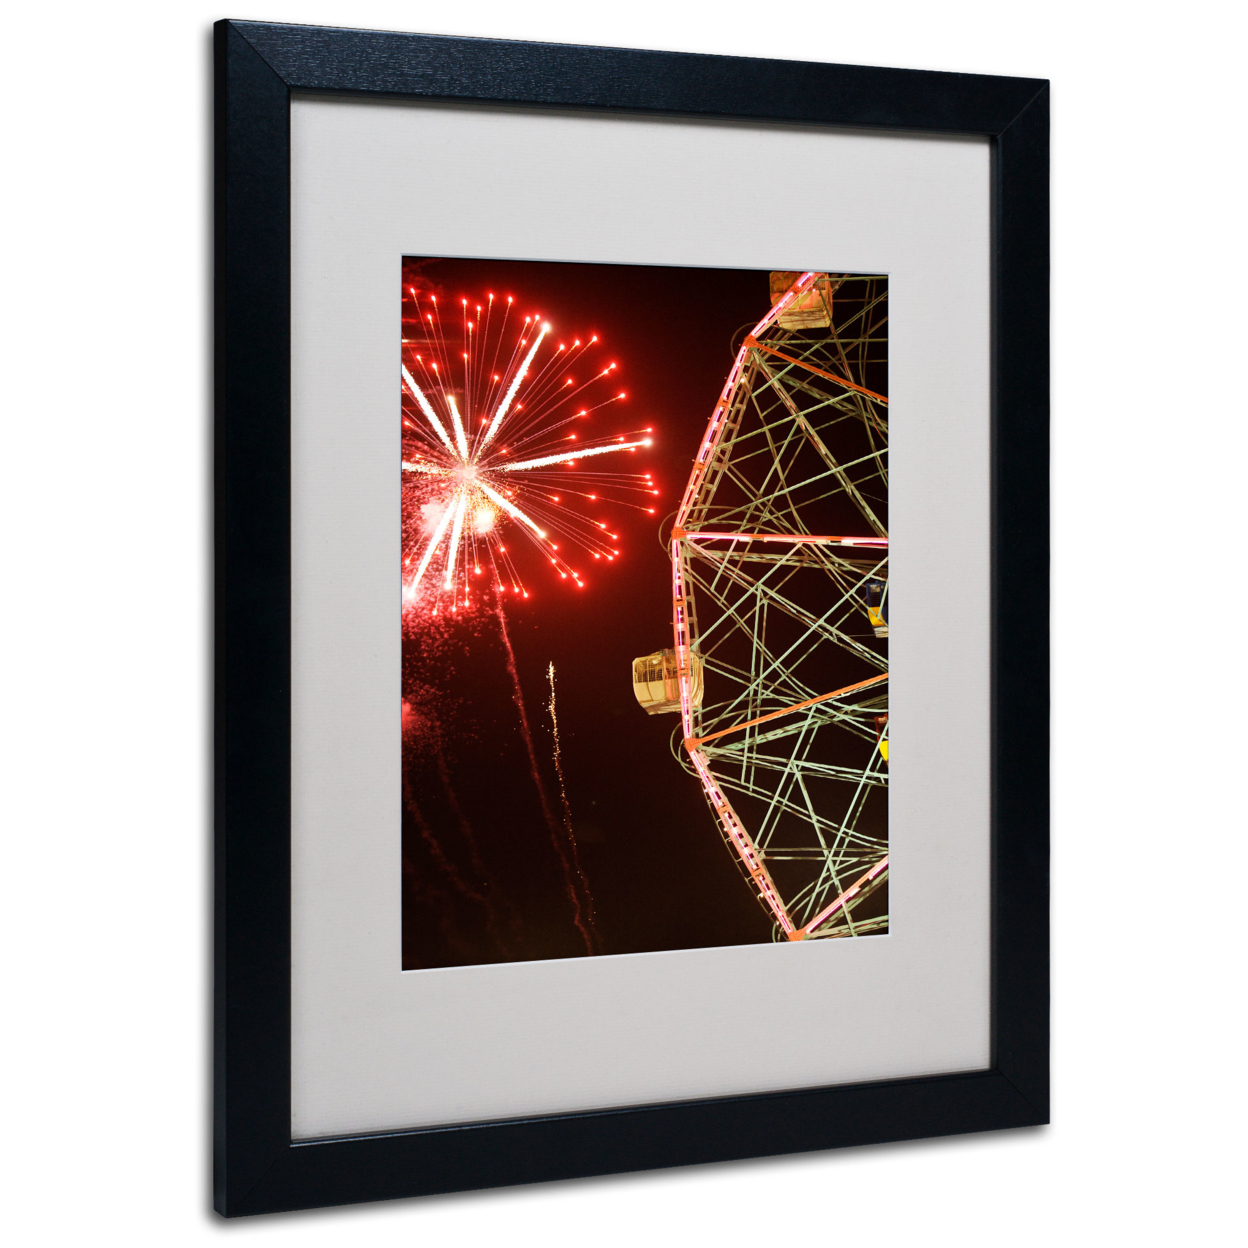 Yale Gurney 'Coney Island Fireworks' Black Wooden Framed Art 18 X 22 Inches